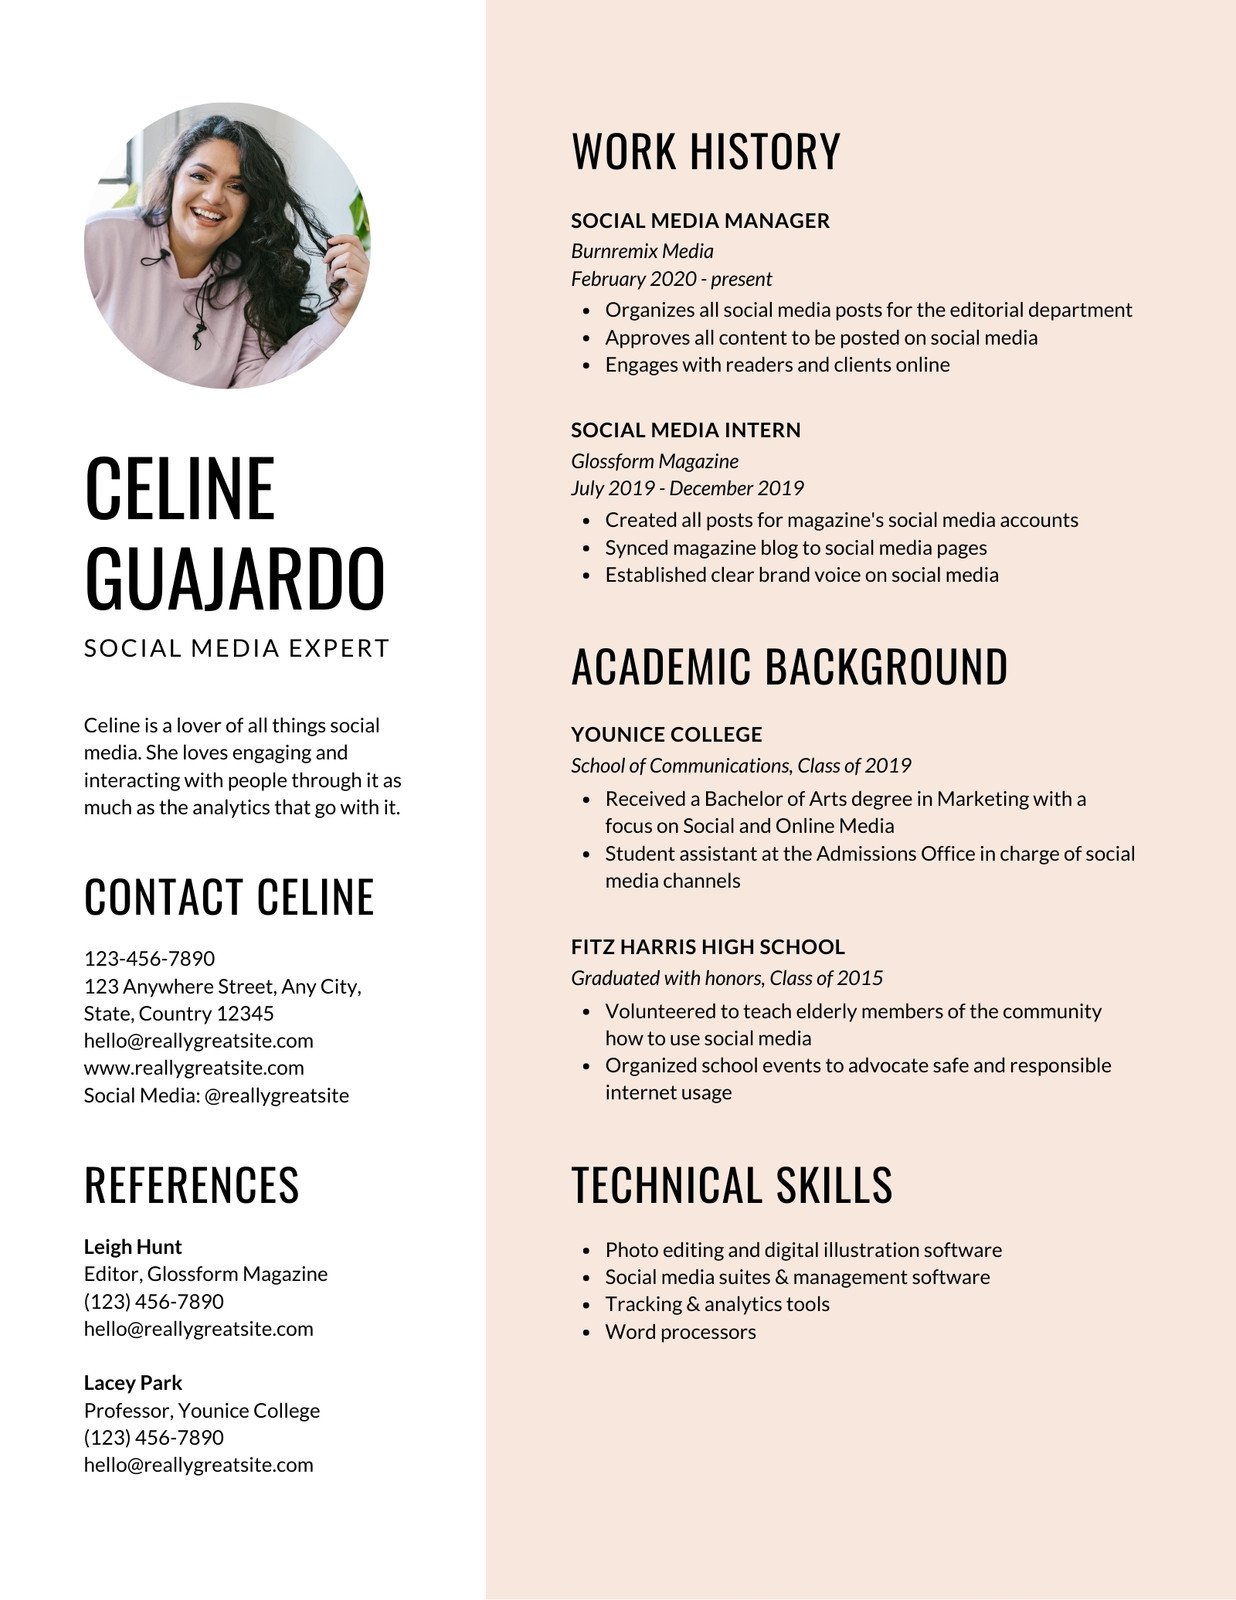 graphic design infographic resume